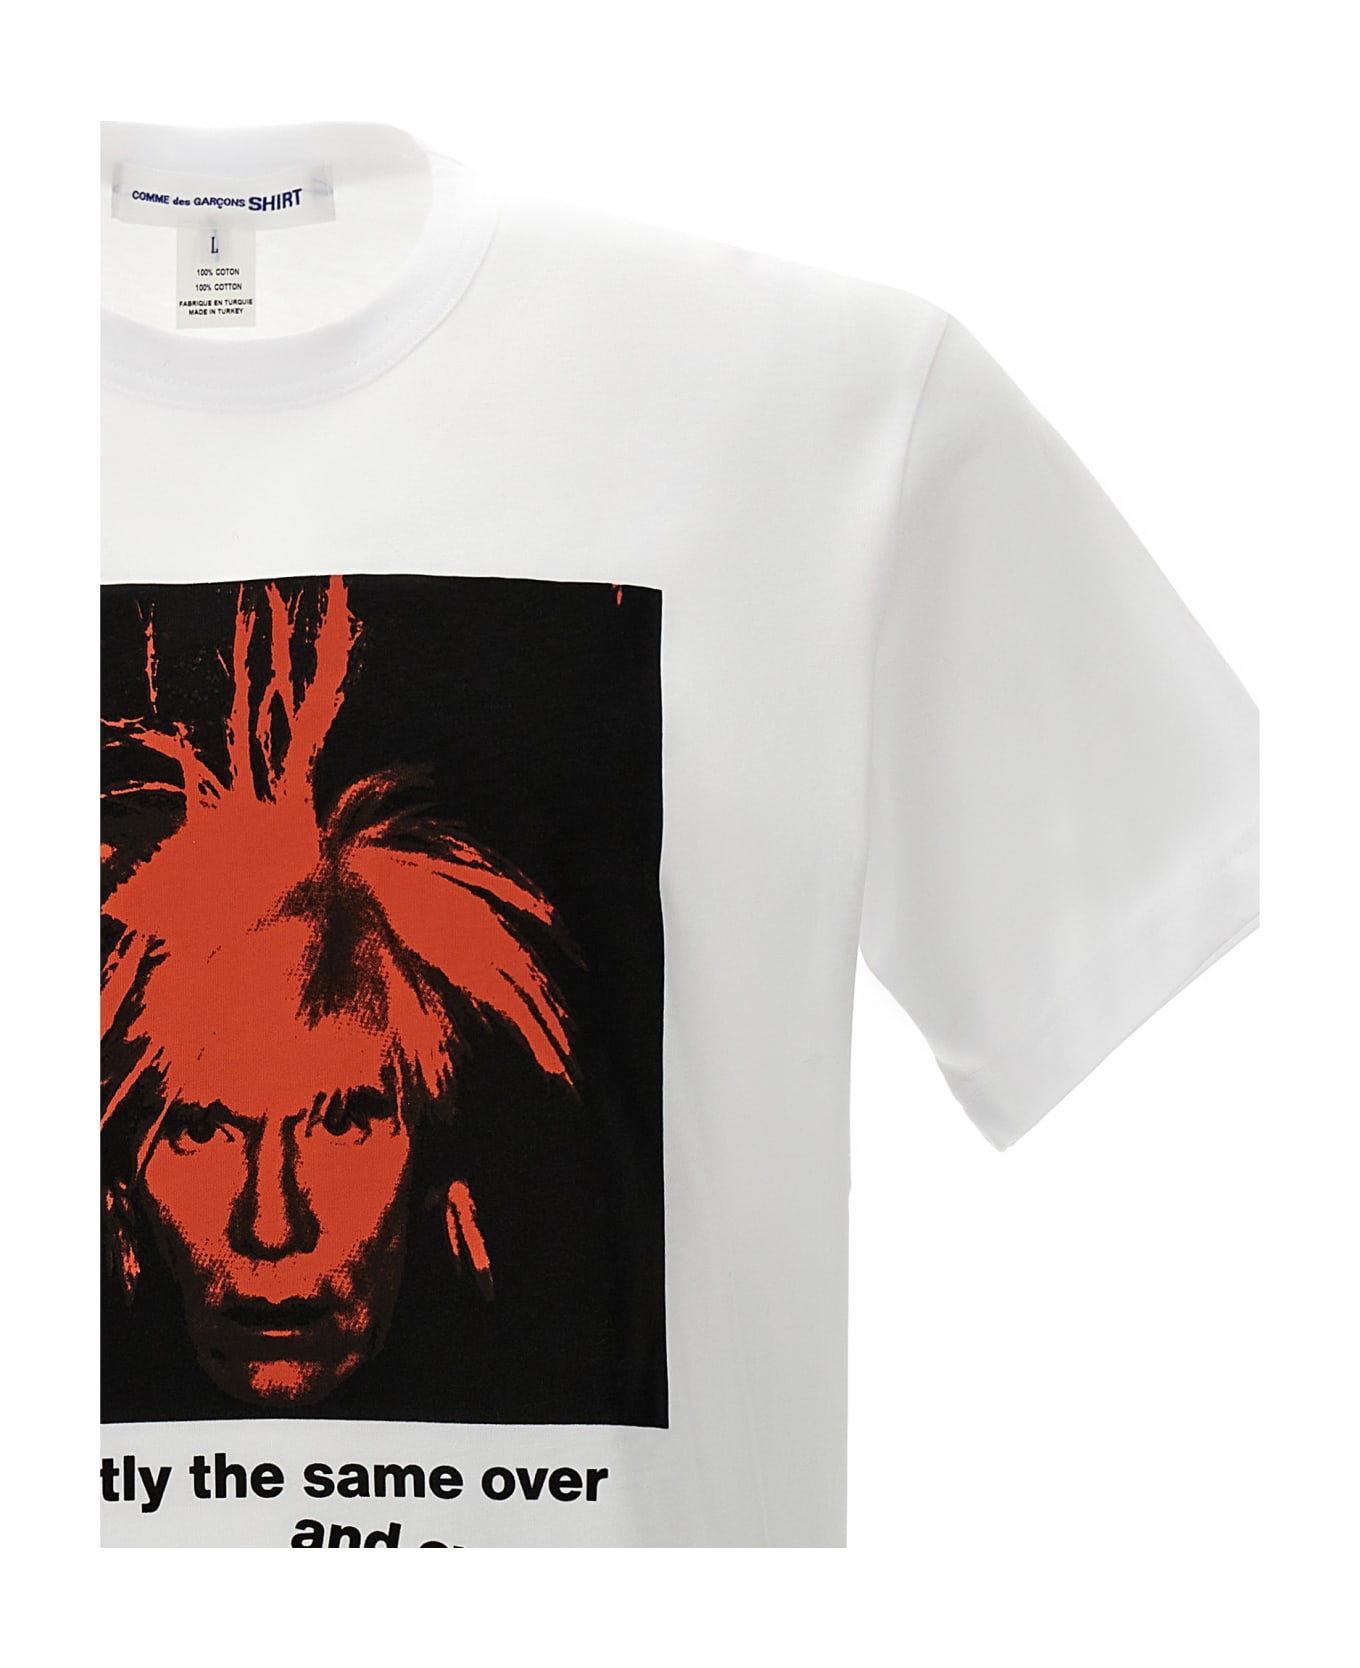 Comme des Garçons Shirt 'andy Warhol' T-shirt - White シャツ